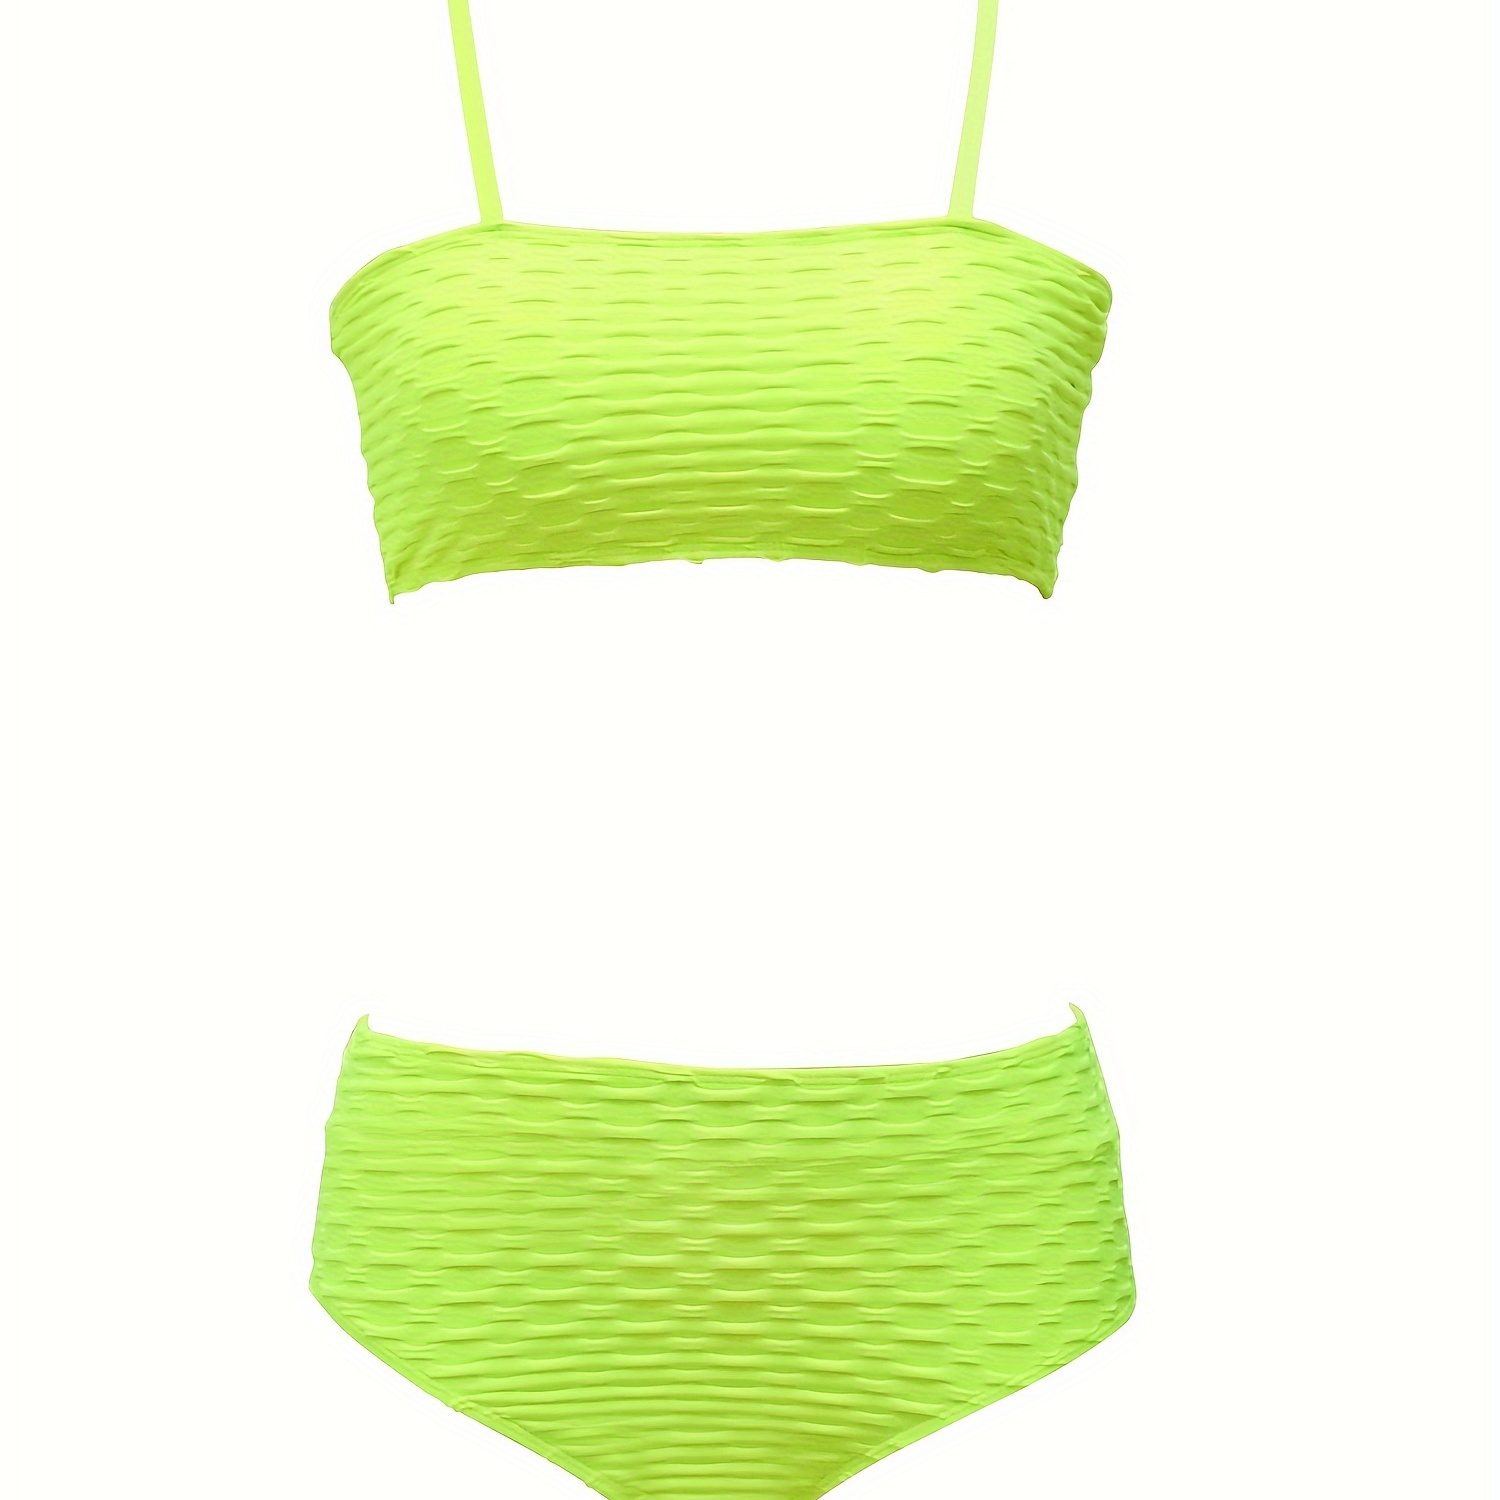 

Women's High-waisted Two-piece Bikini Set, Neon Color, Sexy Textured Swimwear, Fashionable Bathing Suit